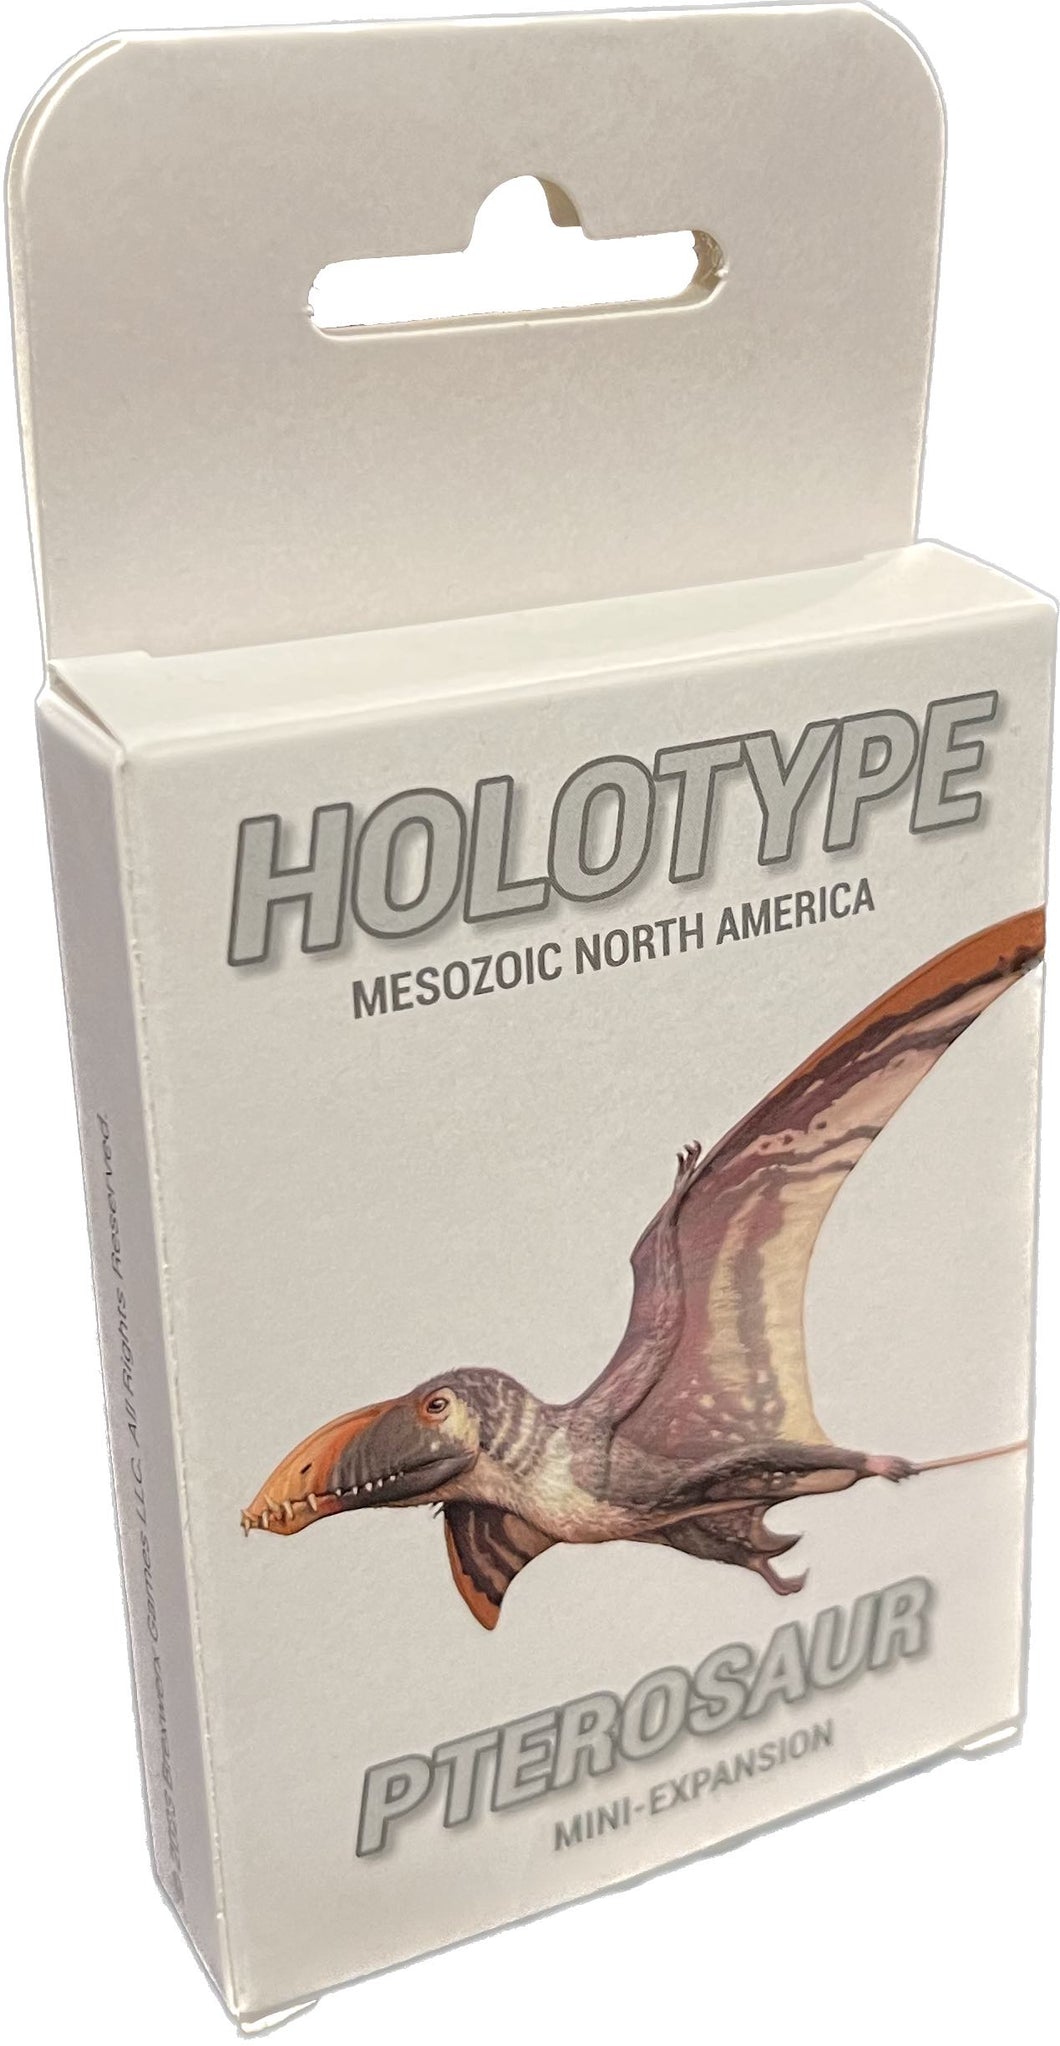 Pterosaur Mini-Expansion: Mesozoic North America